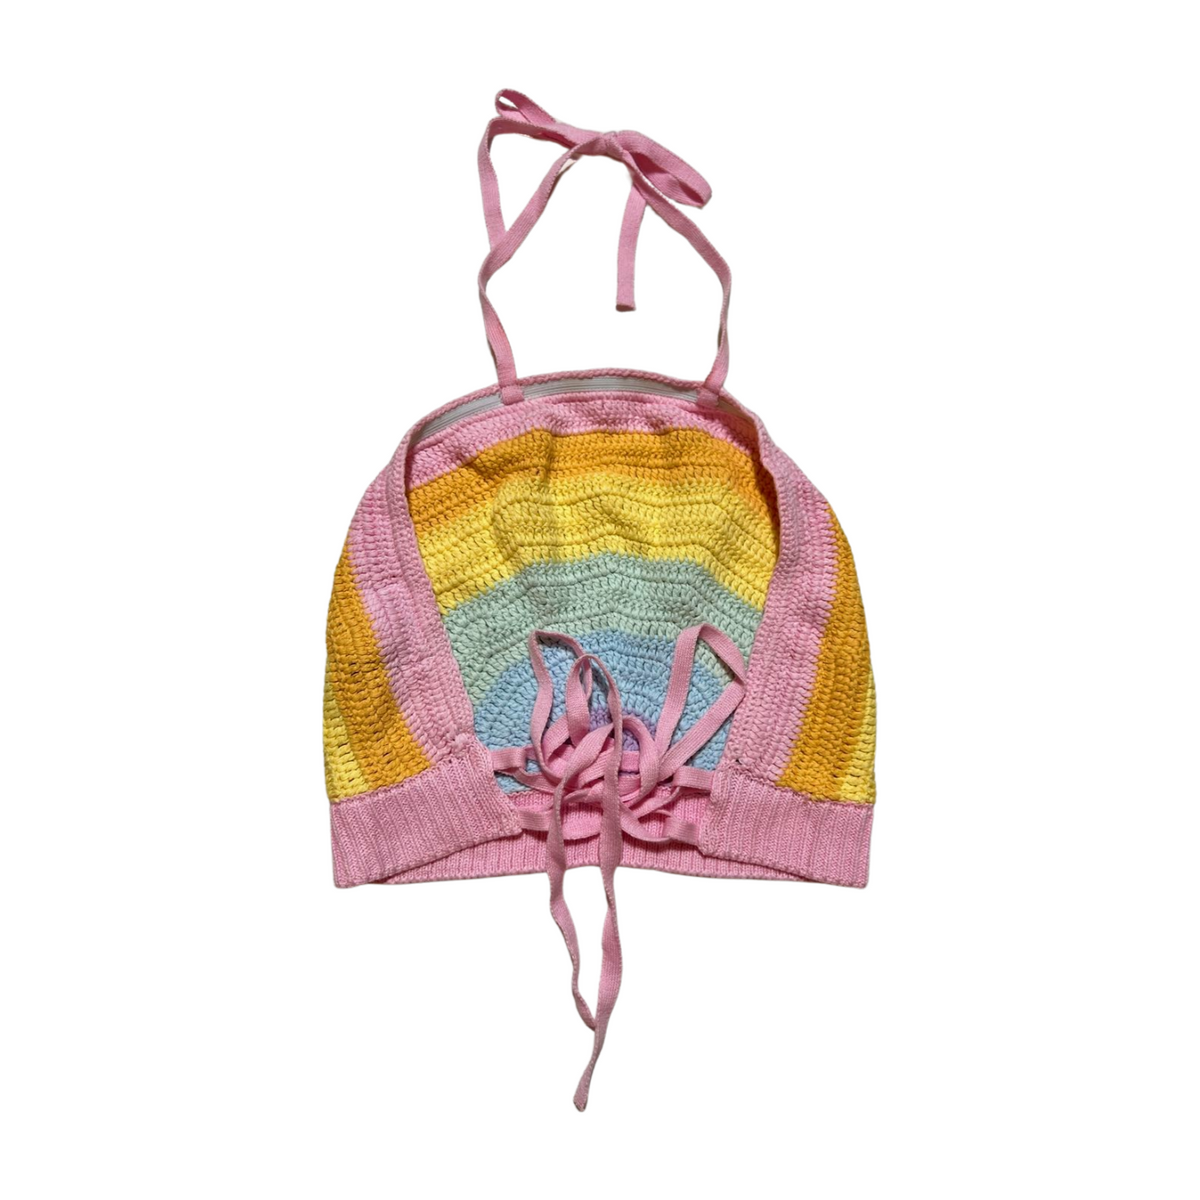 Sweet Society- Pink Crochet Crop Top